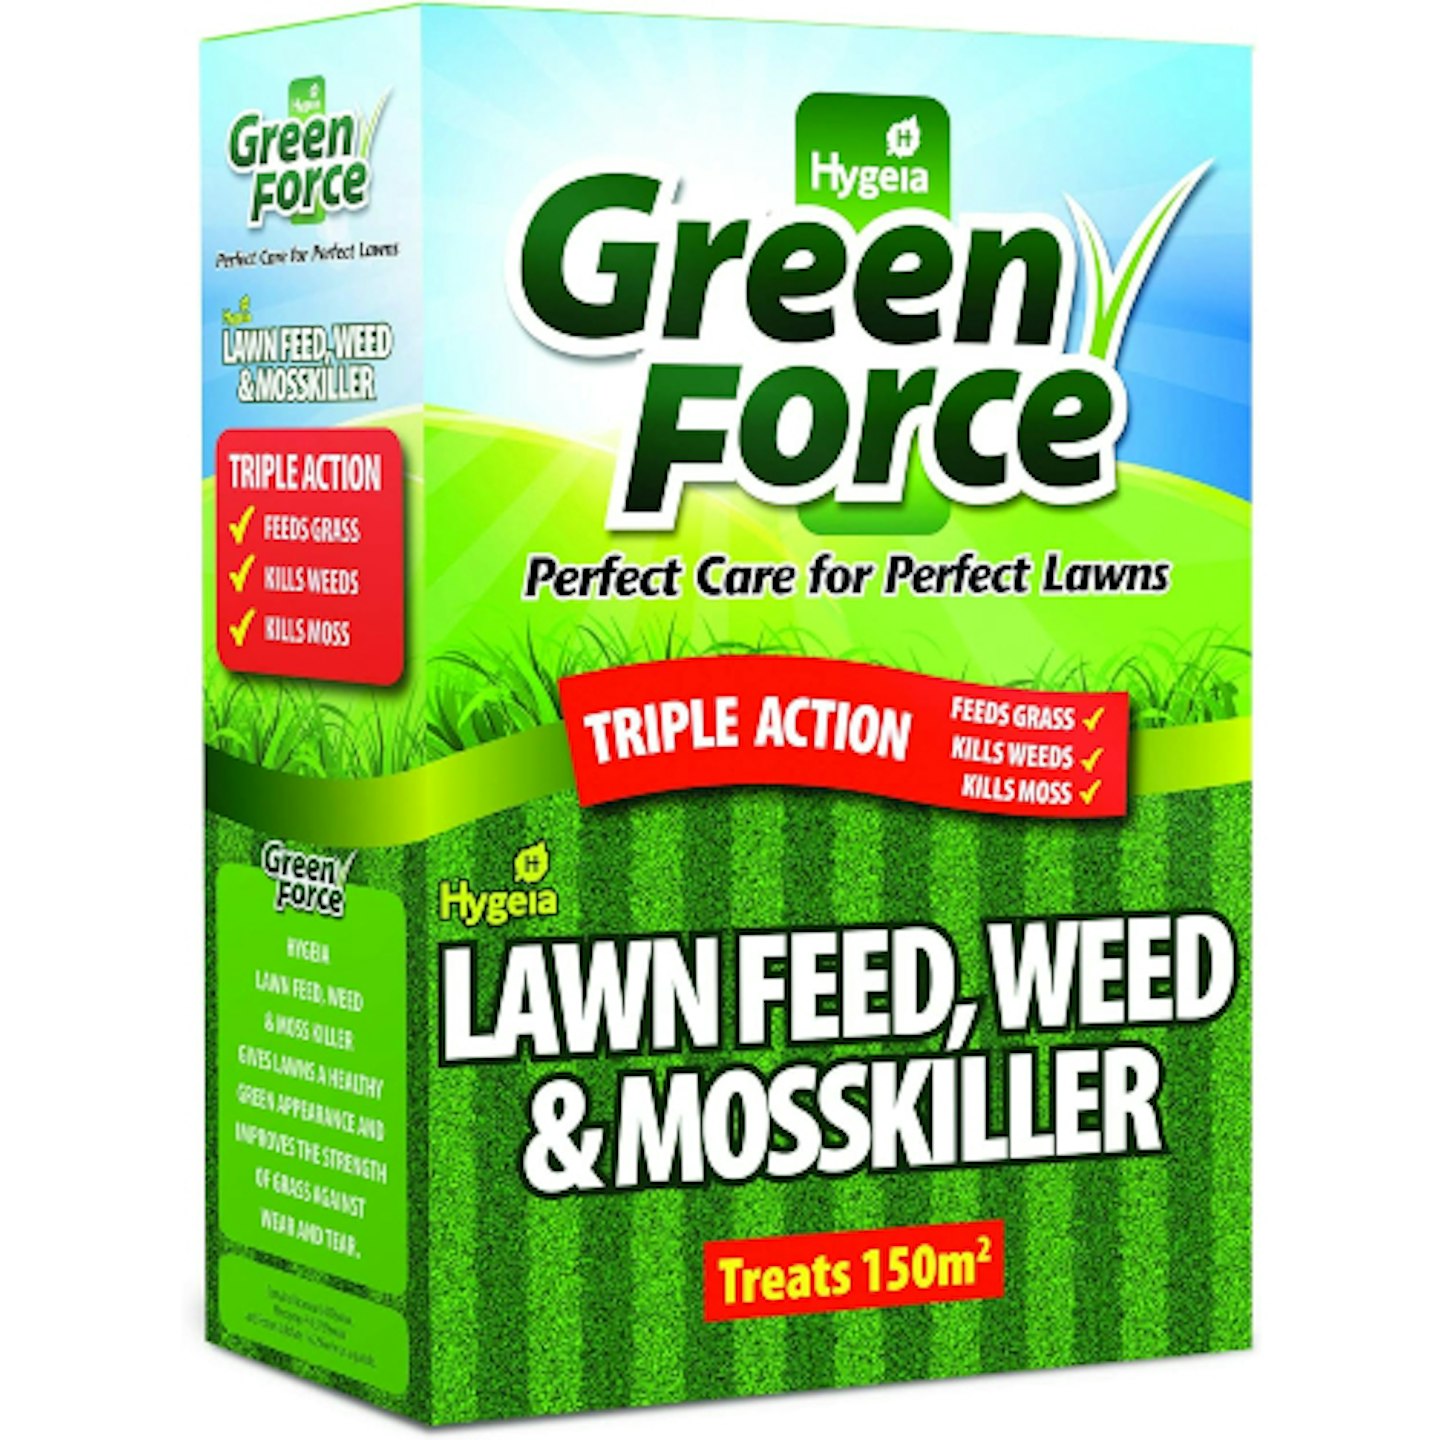 Greenforce lawn feed 